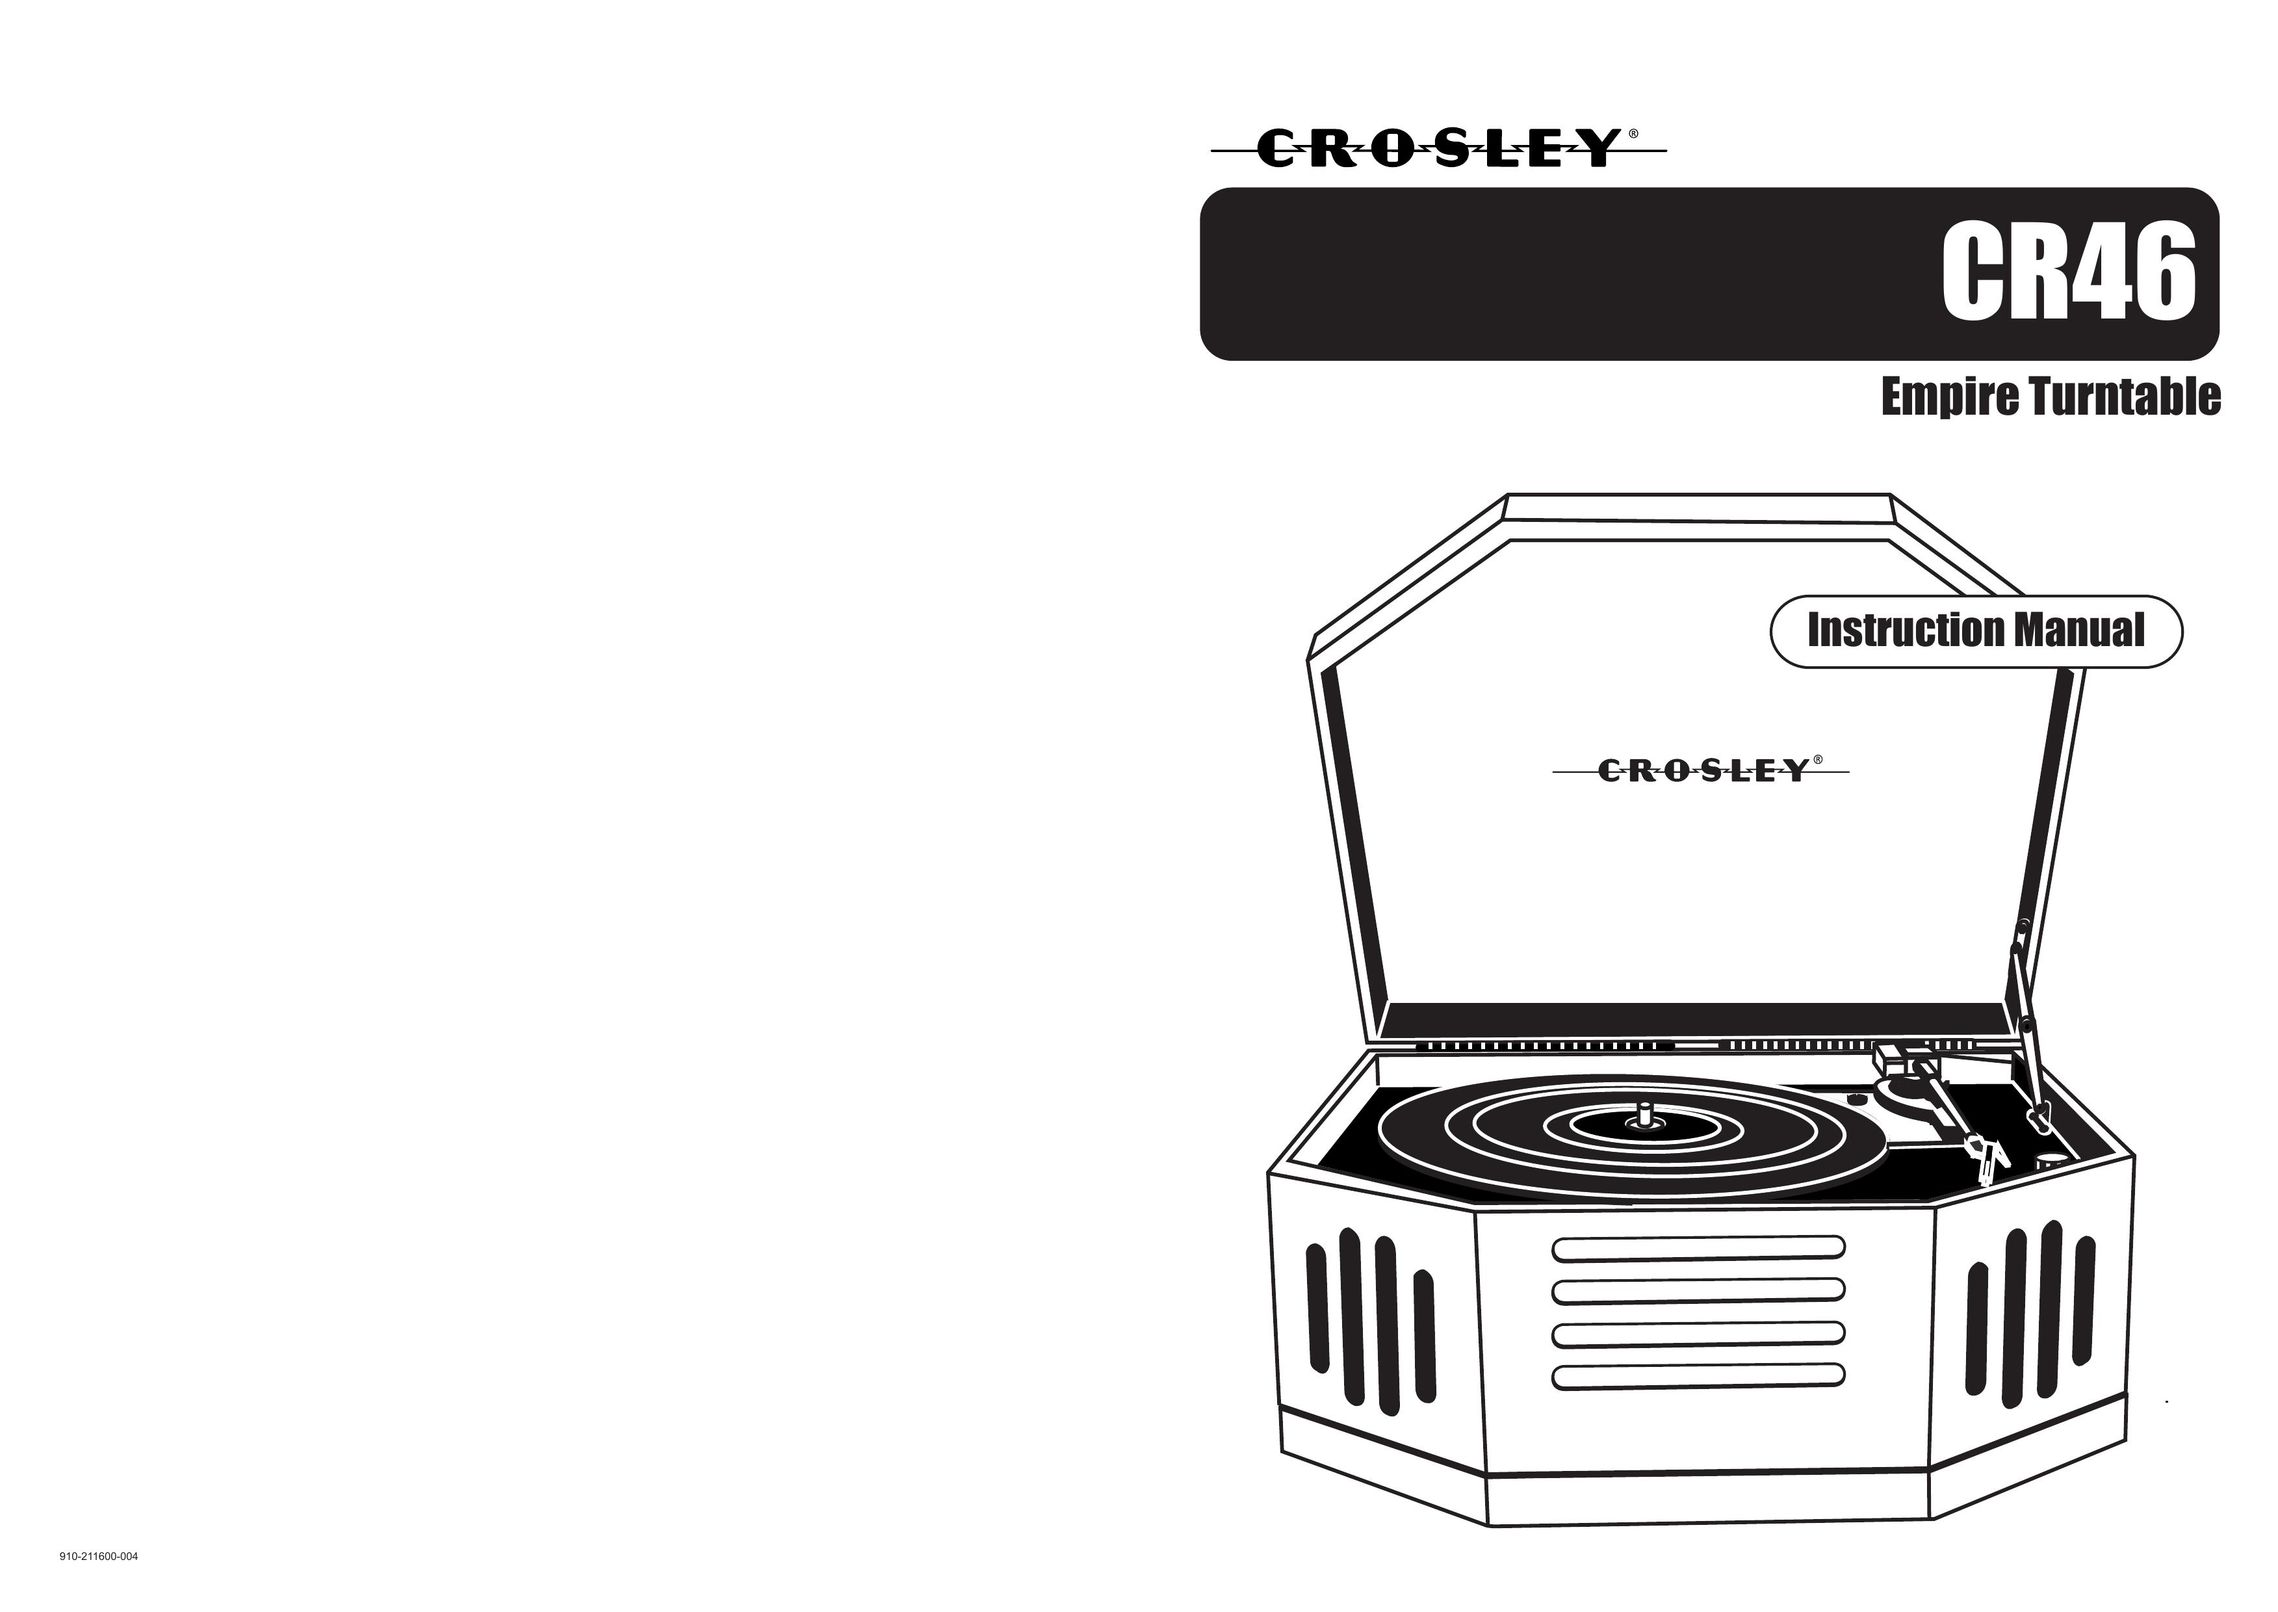 Crosley CR46 Turntable User Manual